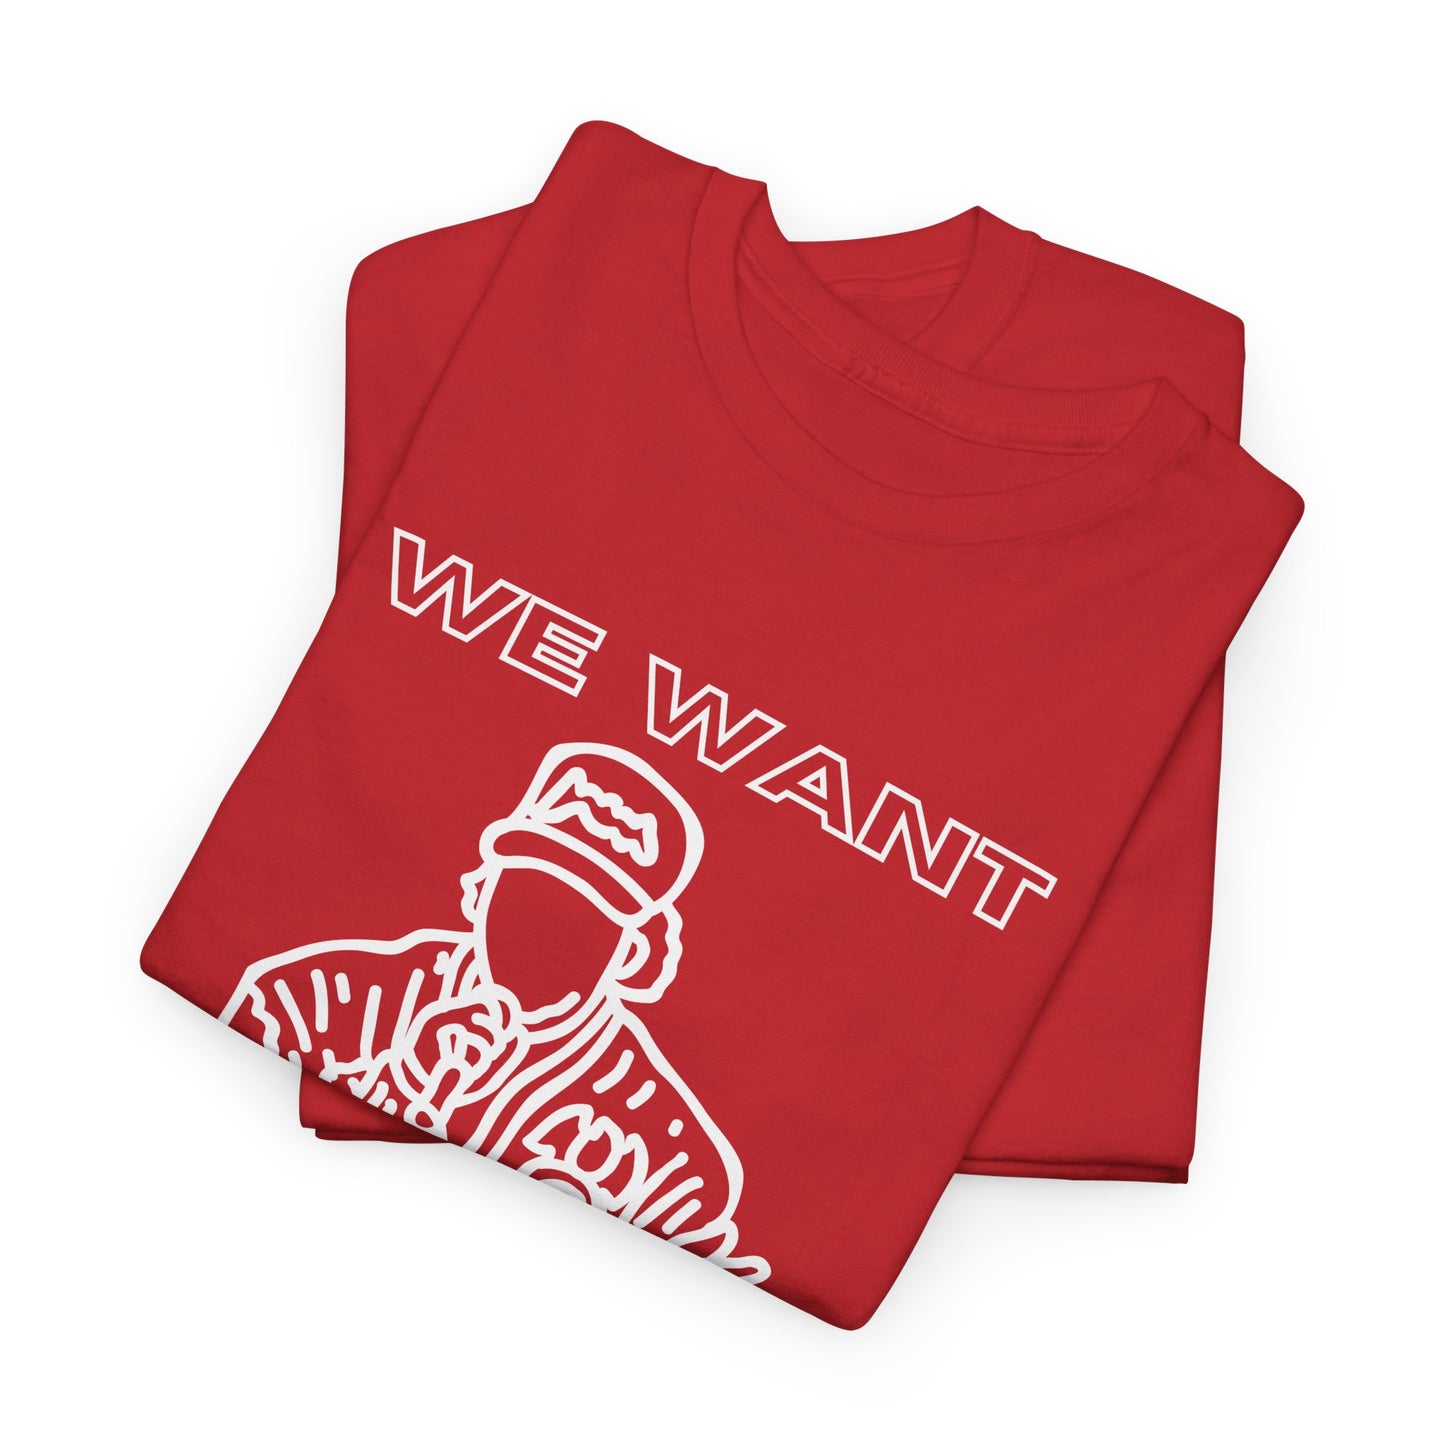 Unisex Heavy Cotton Graphic Design (We Want Eazy) T-shirt